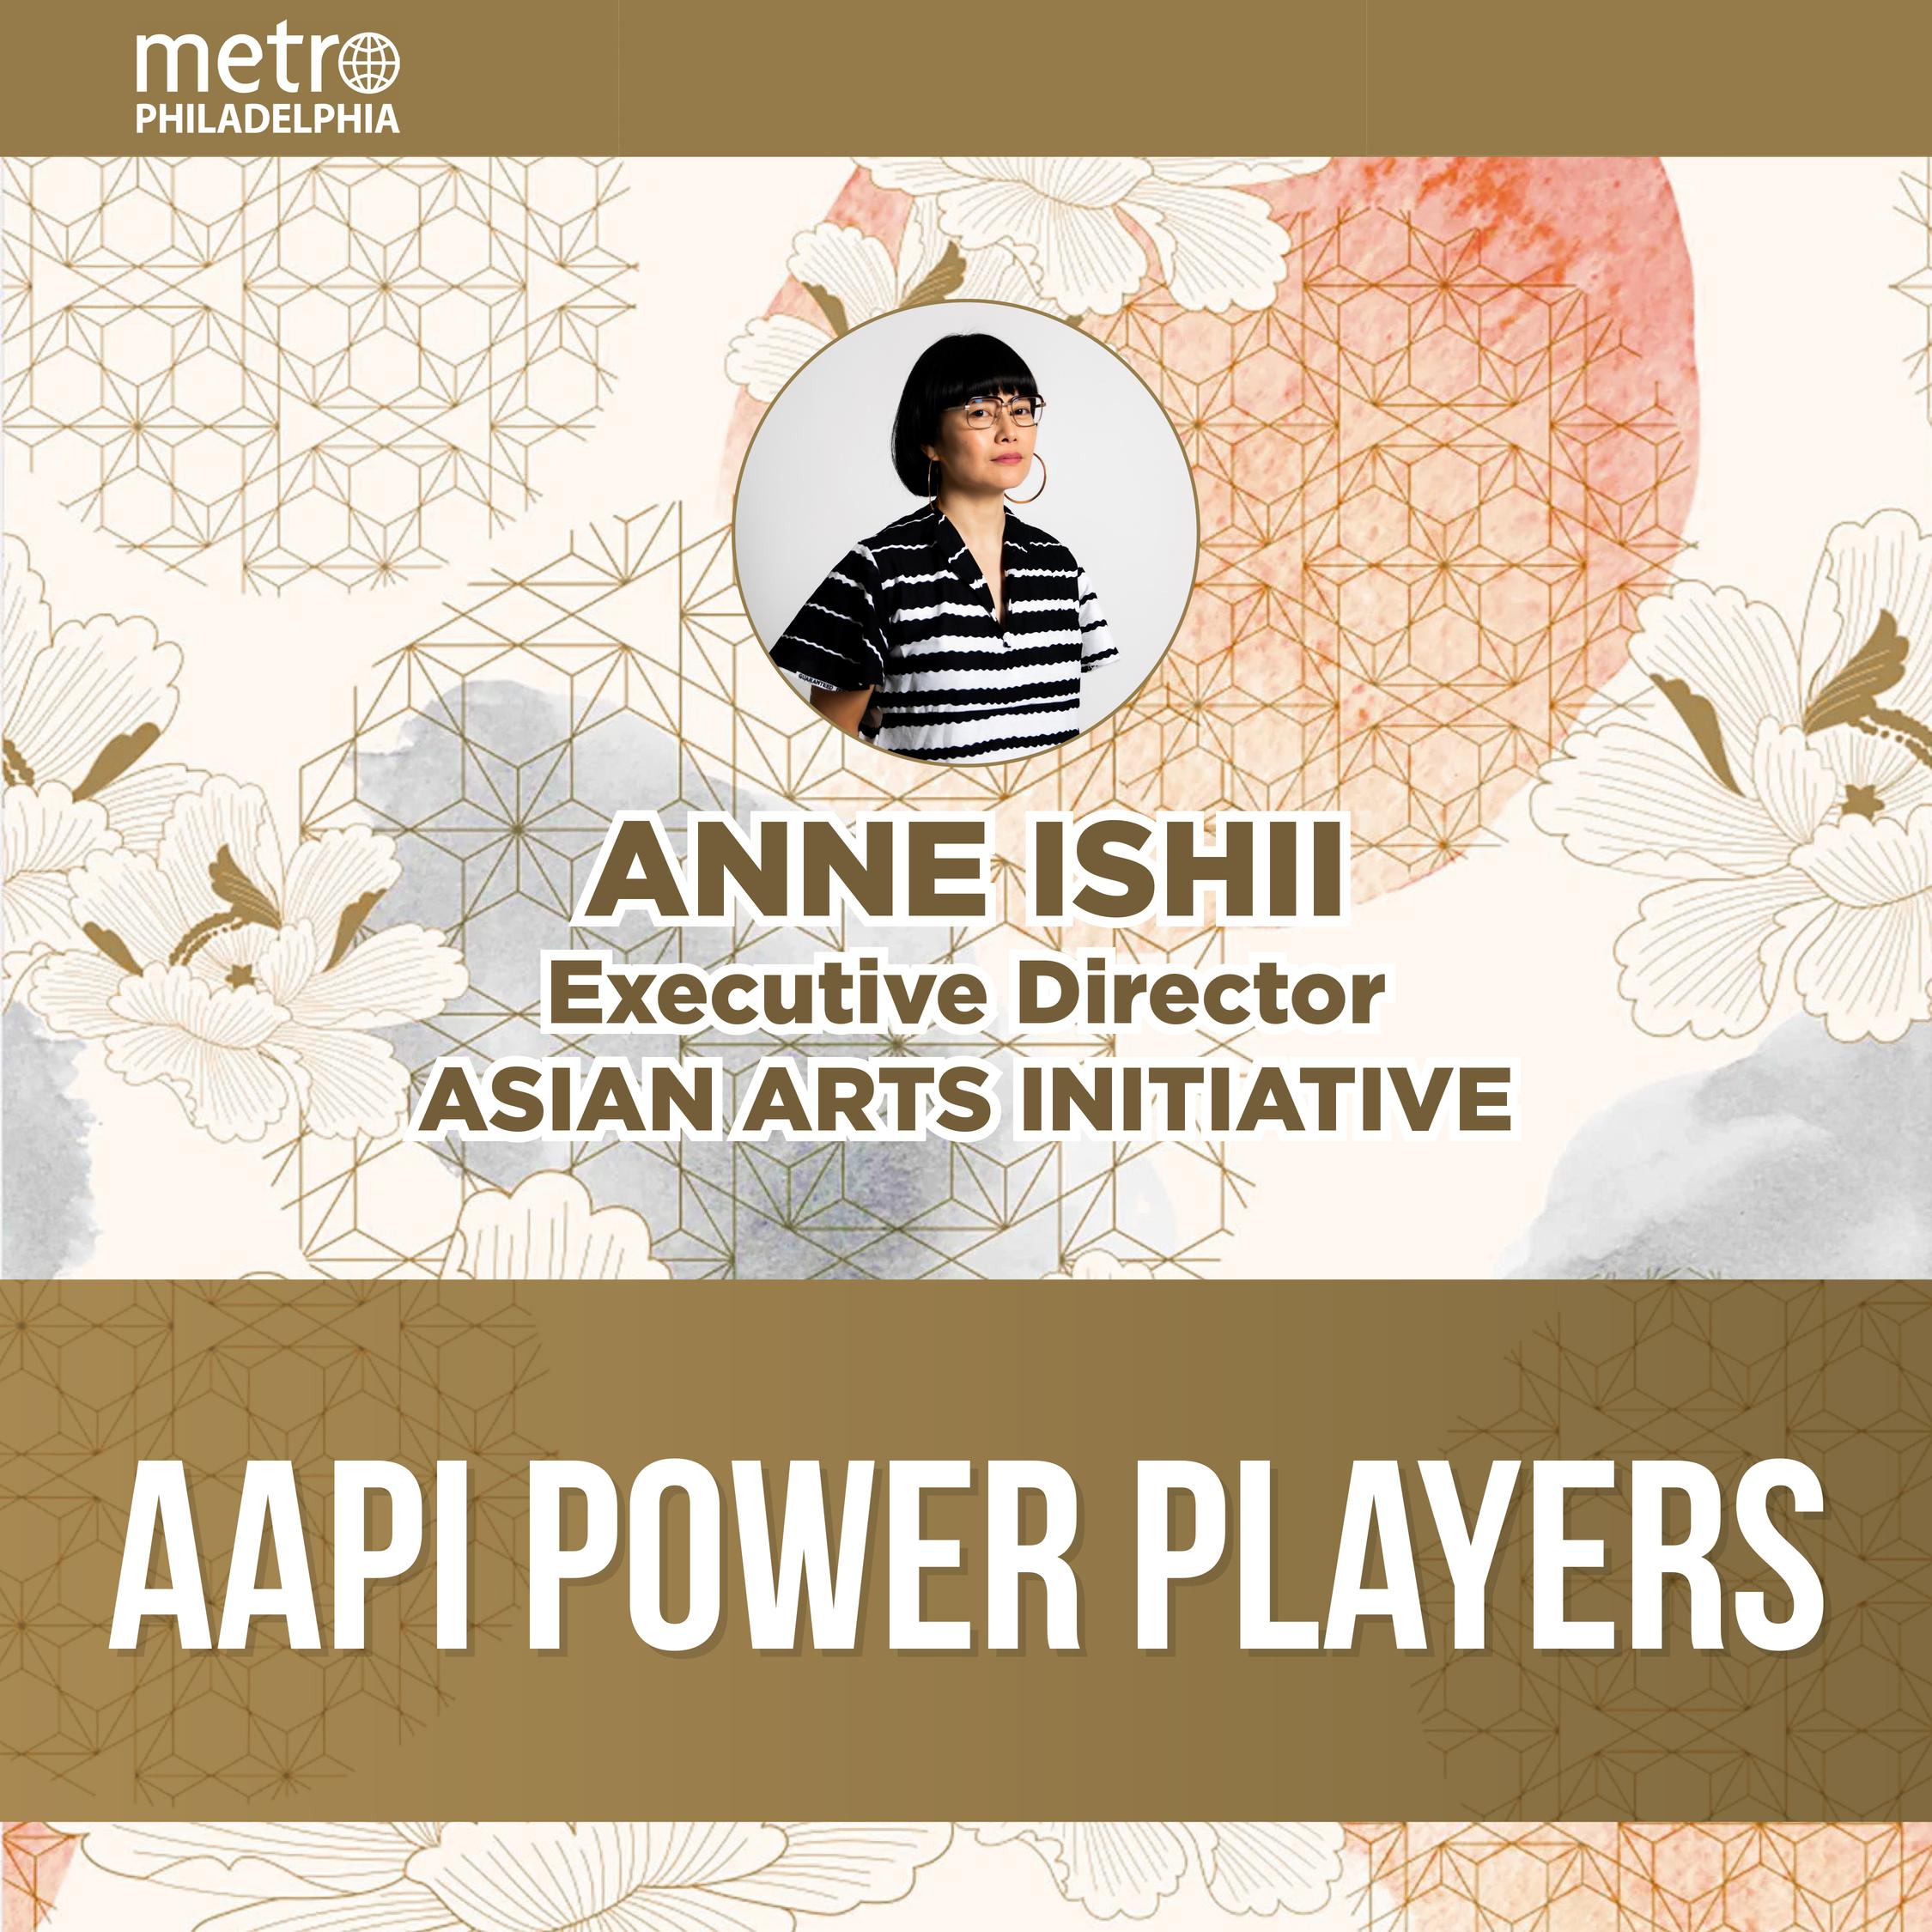 Poster of Anne Ishii named as AAPI Power Players on Metro Philadelphia.